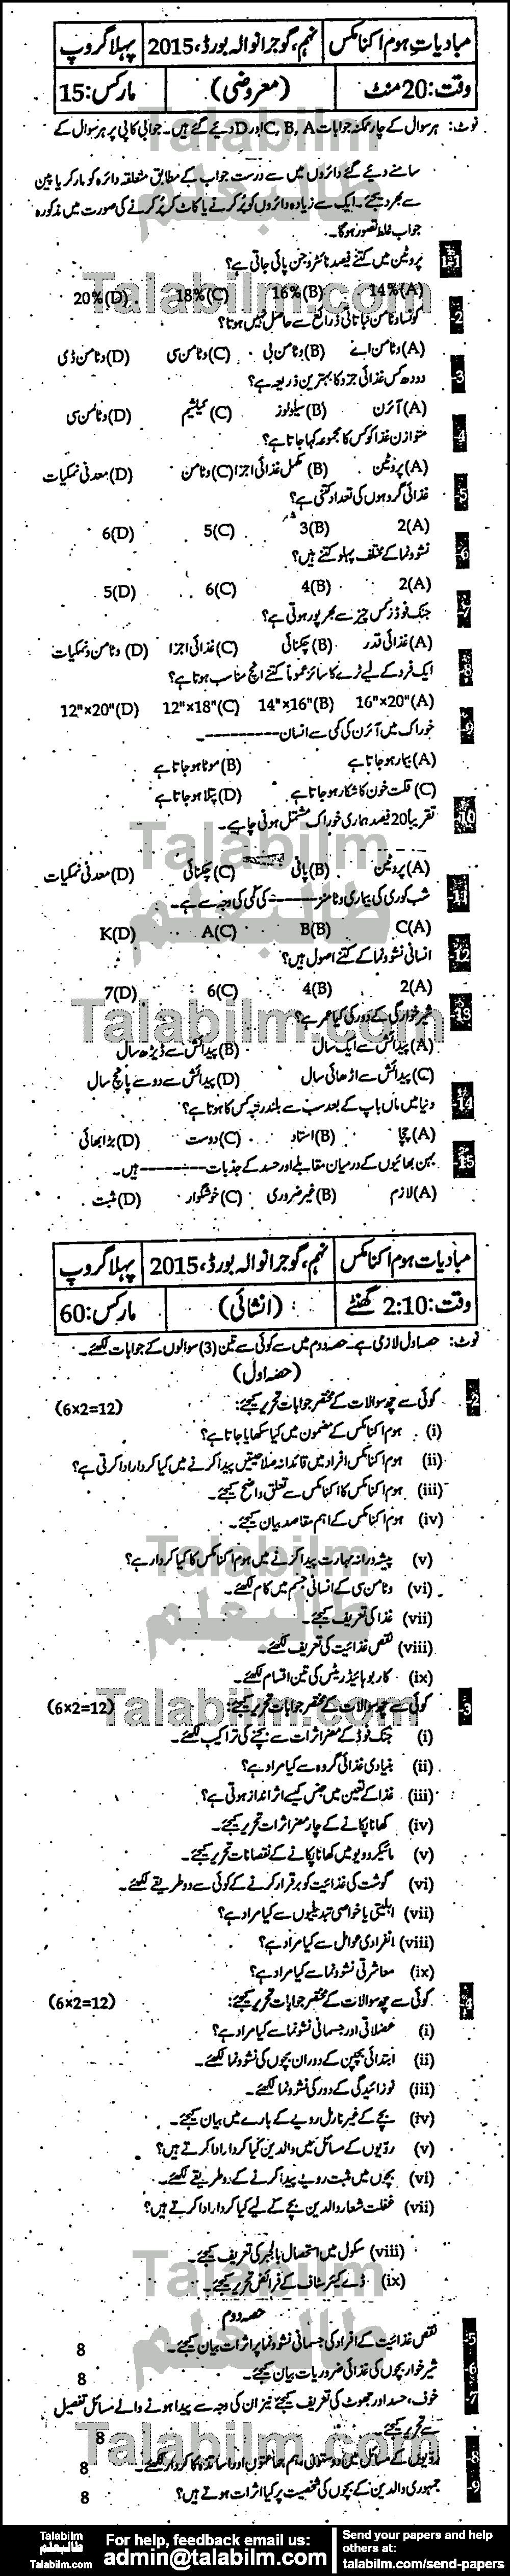 Home Economics 0 past paper for Urdu Medium 2015 Group-I